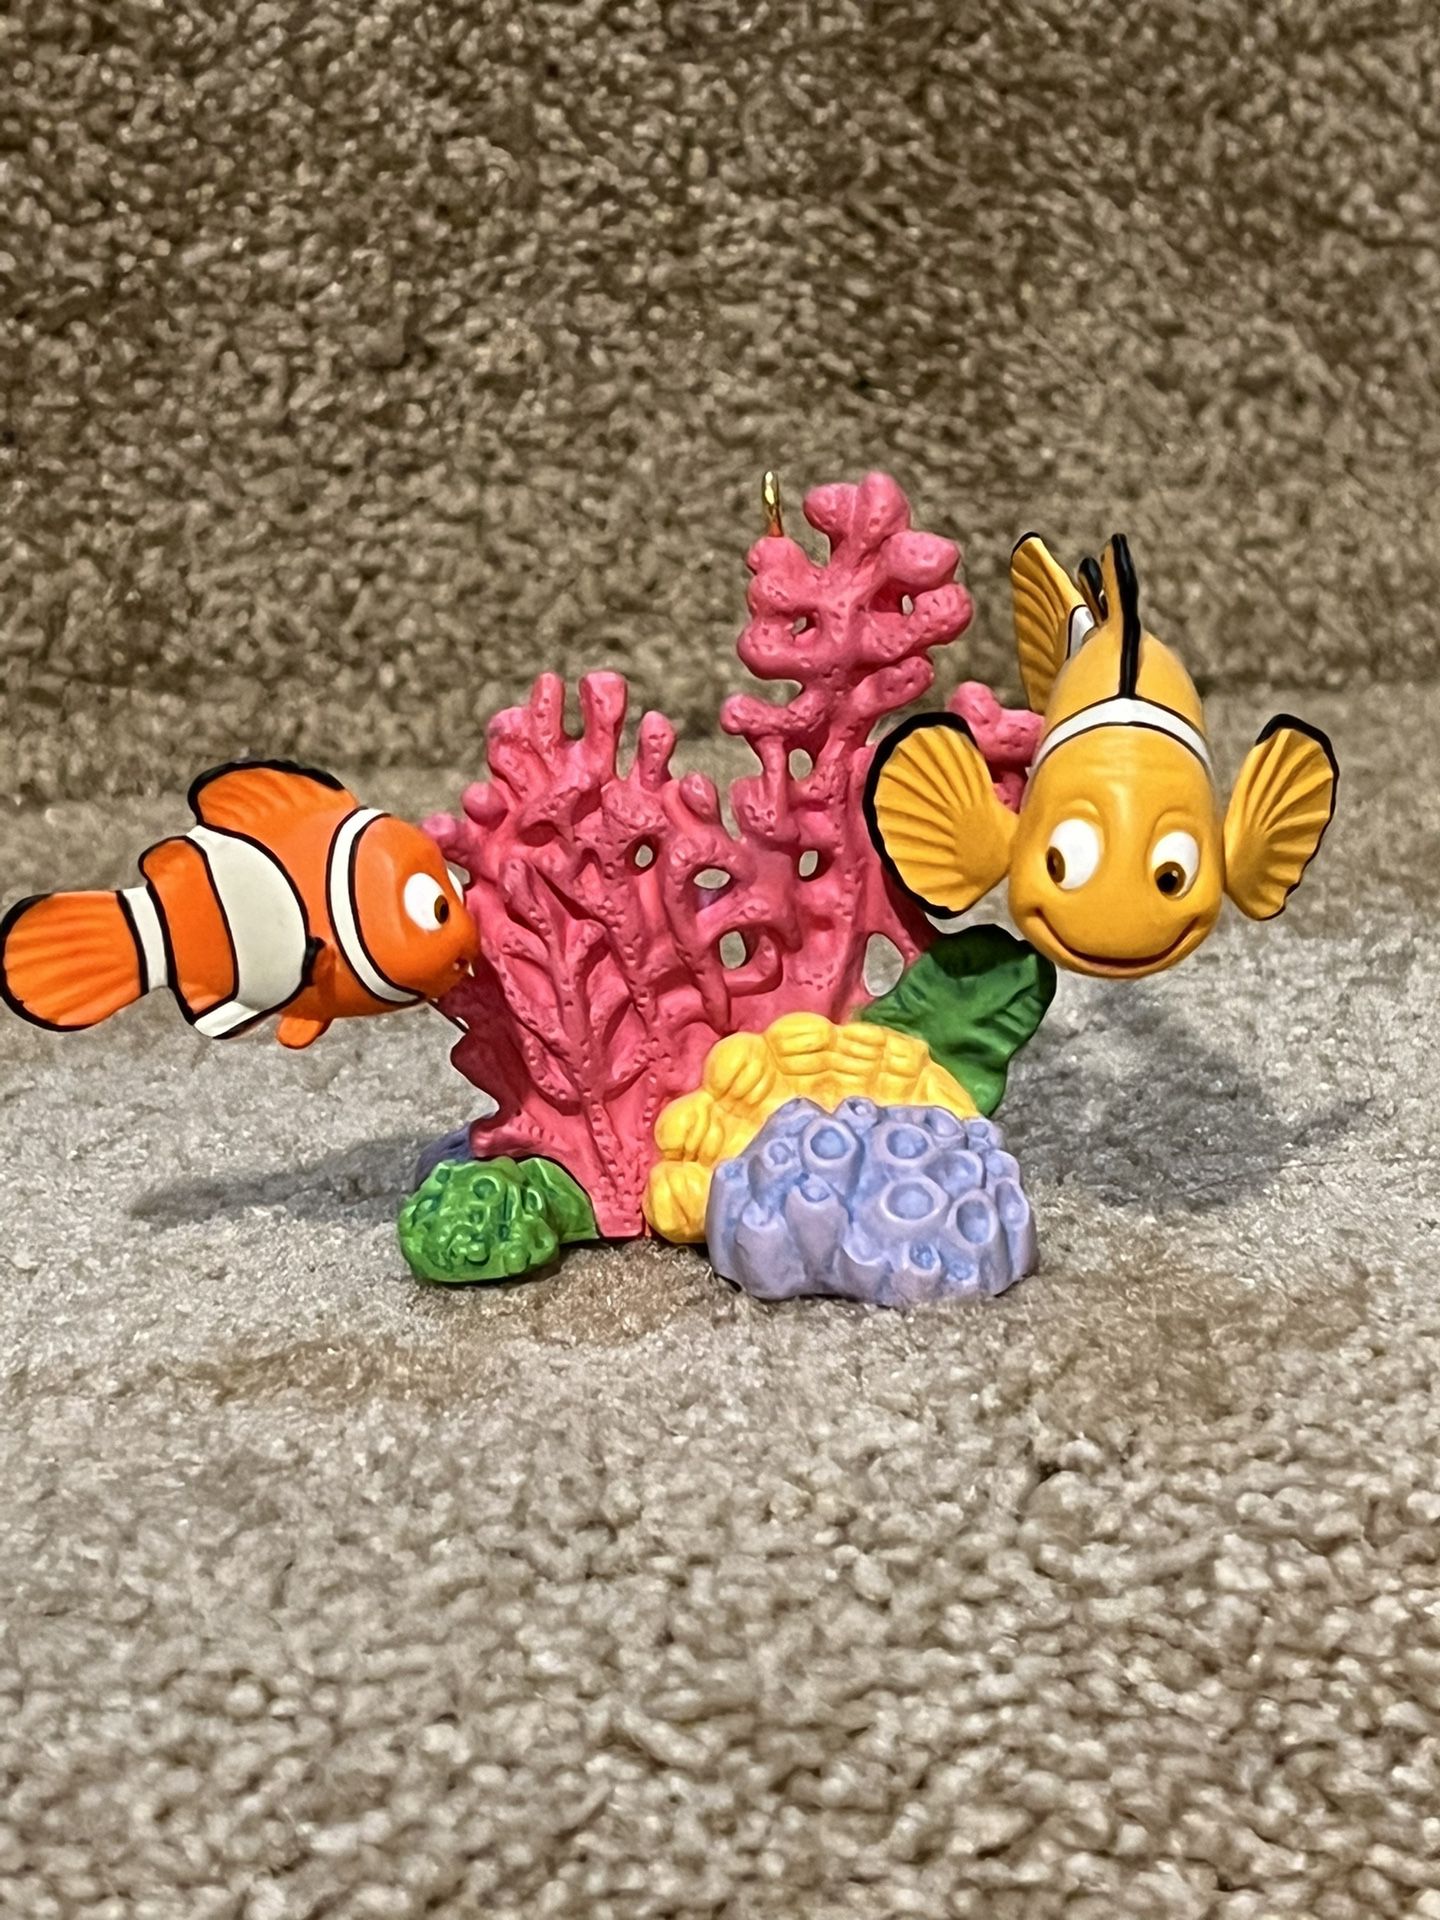 2003 Hallmark Ornament Marlin and Nemo Disney Pixar's Finding Nemo